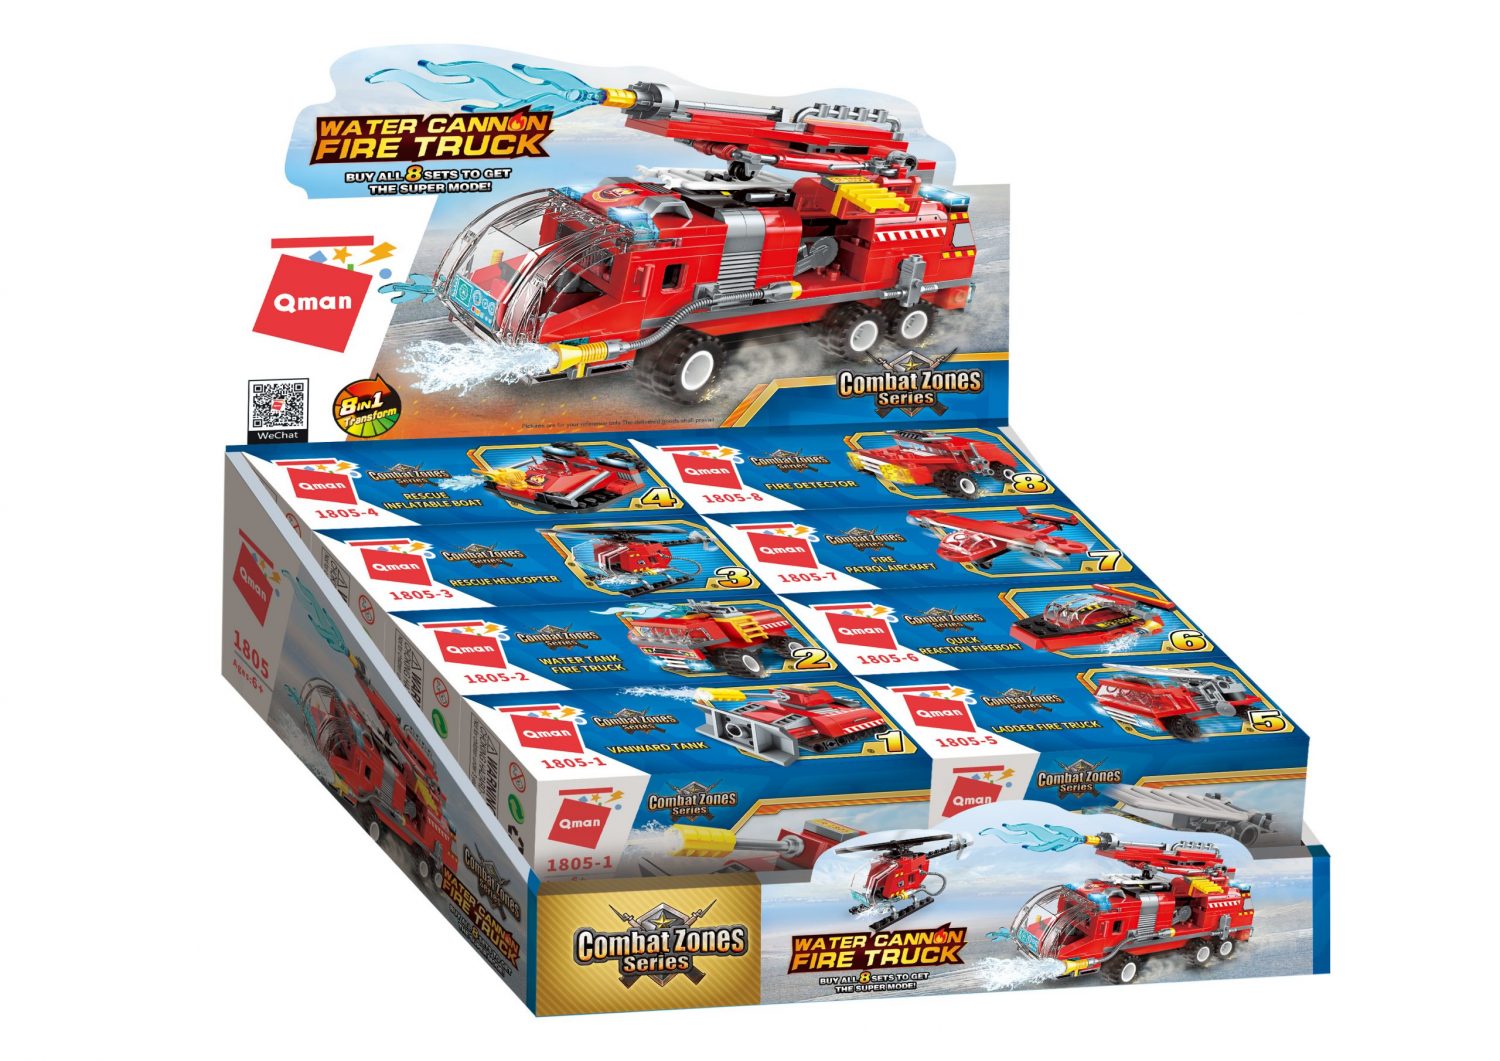 Lego-Qman-Combat Zones-Water Cannon Fire Truck